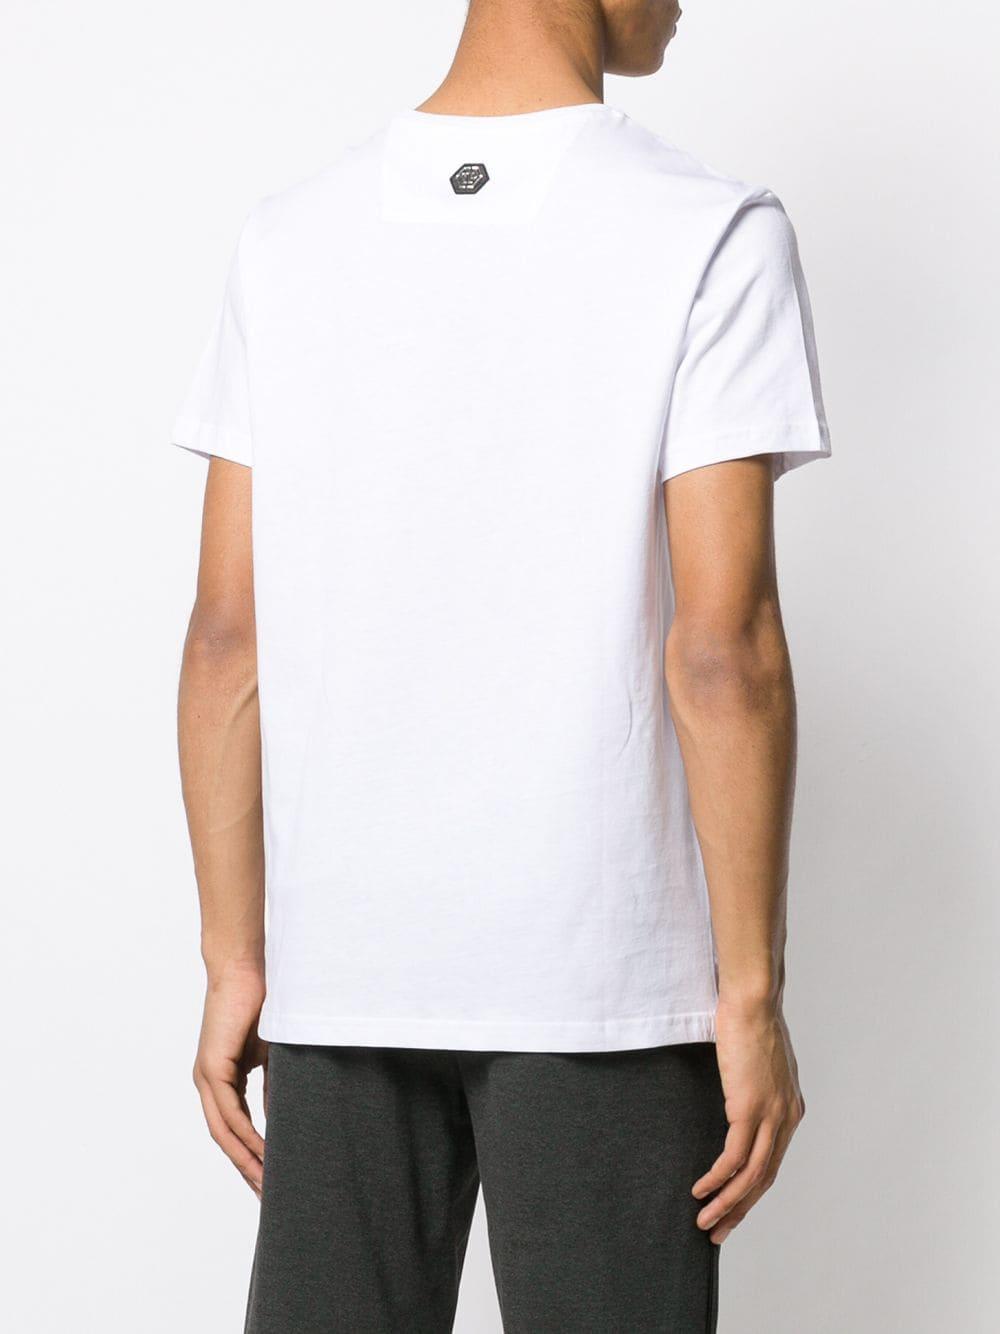 Philipp Plein T-shirt Platinum Cut in White for Men - Lyst